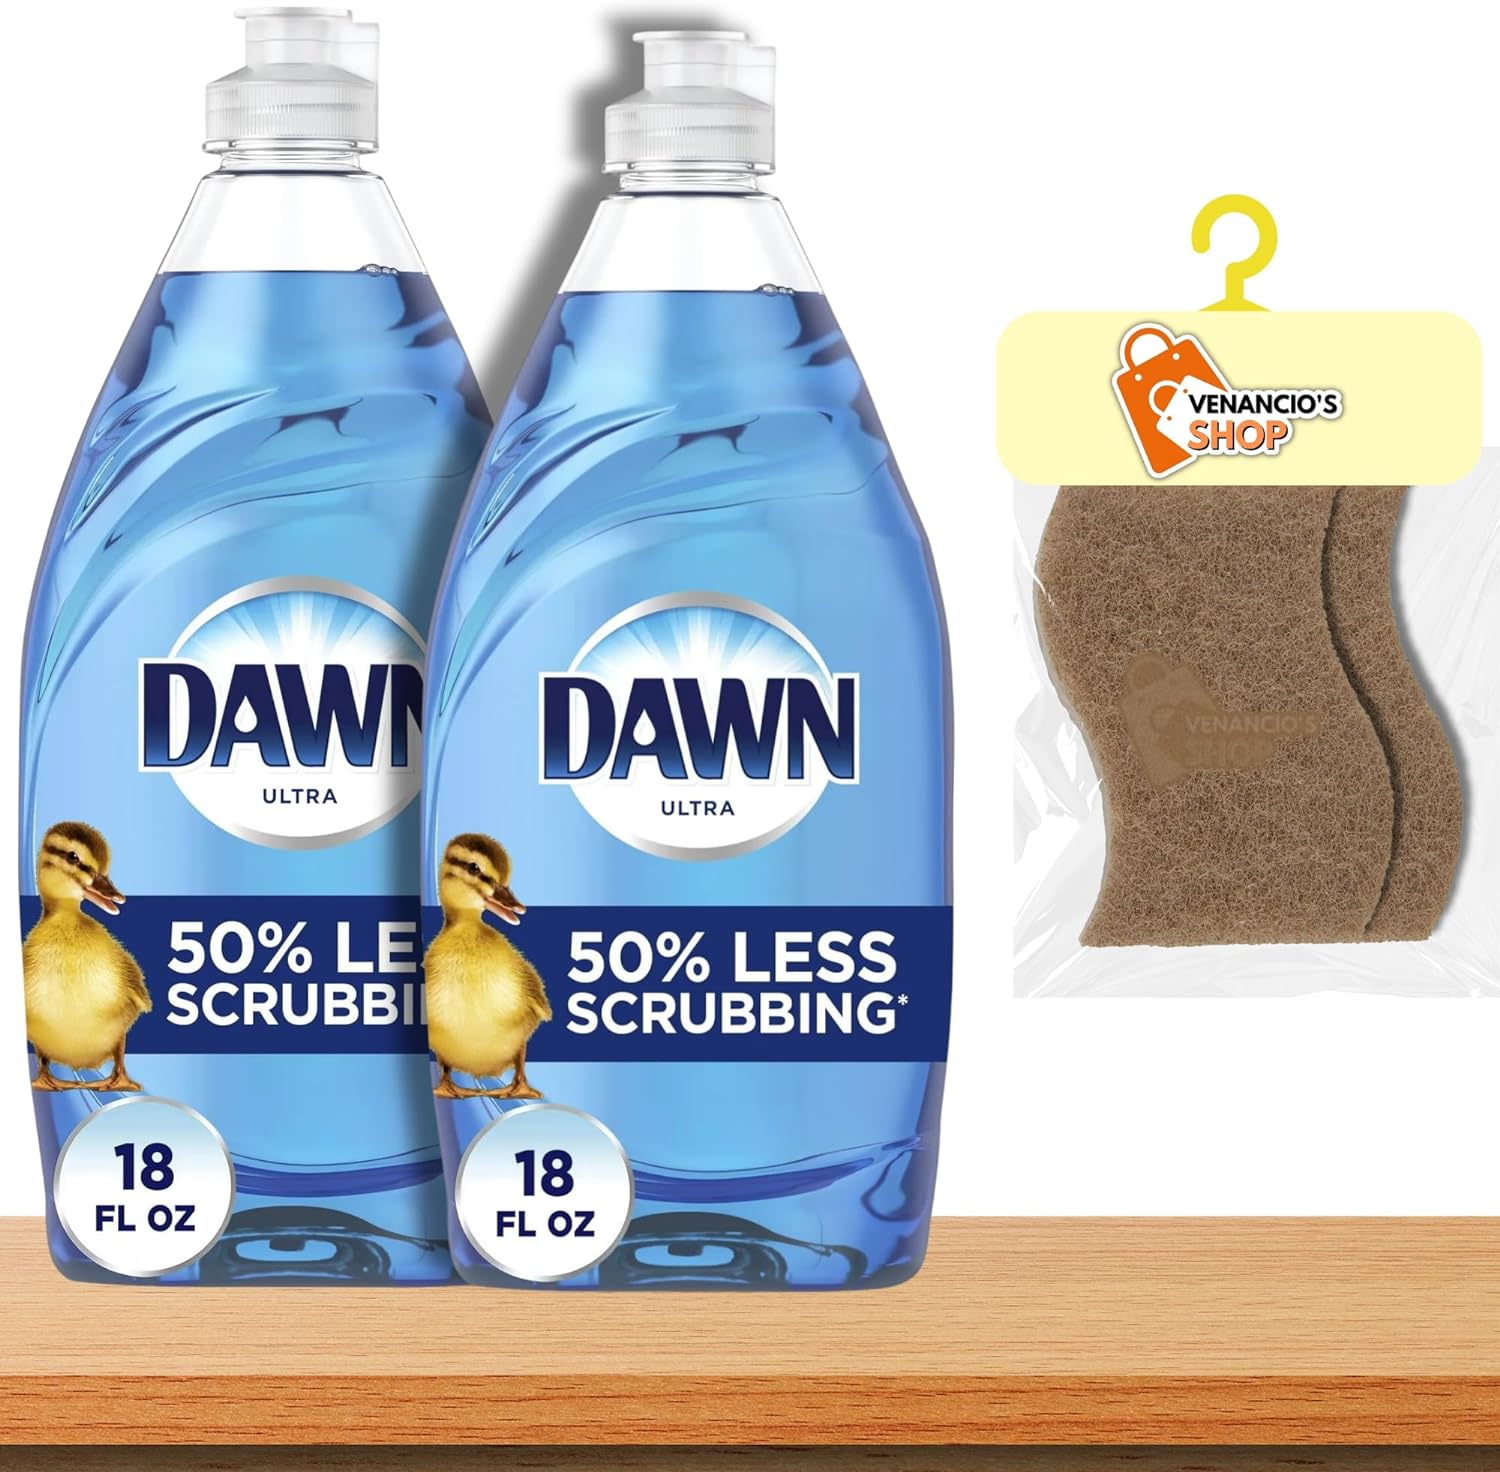 Dawn Ultra Dish Soap Dishwashing Liquid + Includes Venancio’sfridge Sticker and Cleaning Sponge (Original Scent 18 fl oz – Pack of 2)